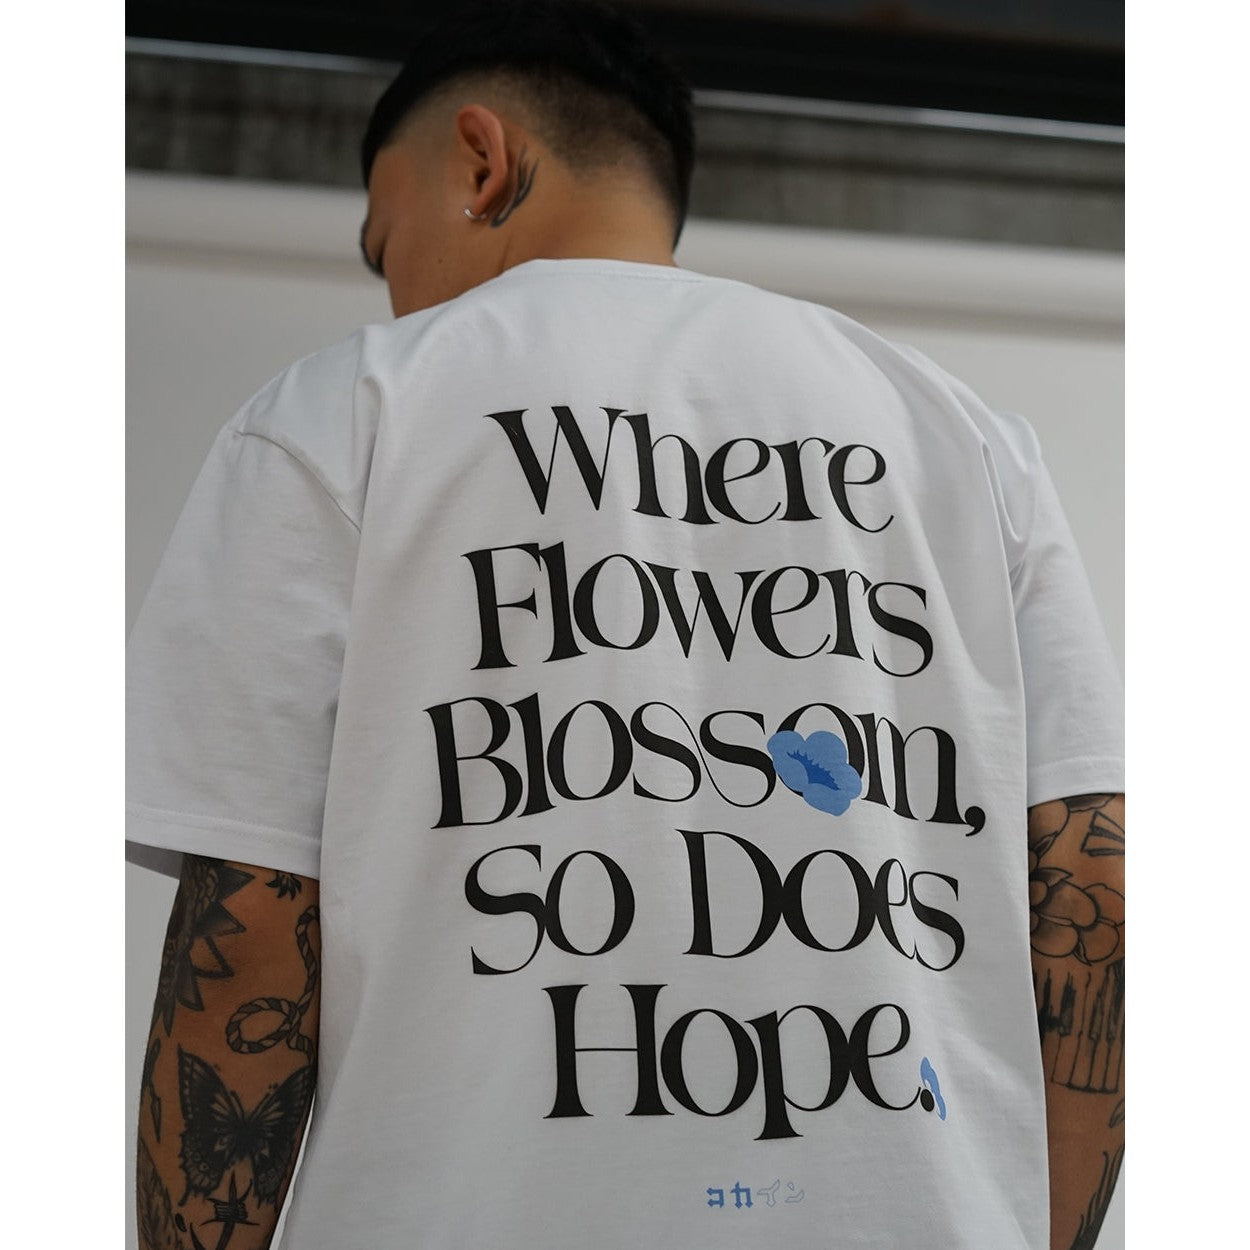 Kokaine - "Where Flowers Blossom, So Does Hope" T Shirt (White)